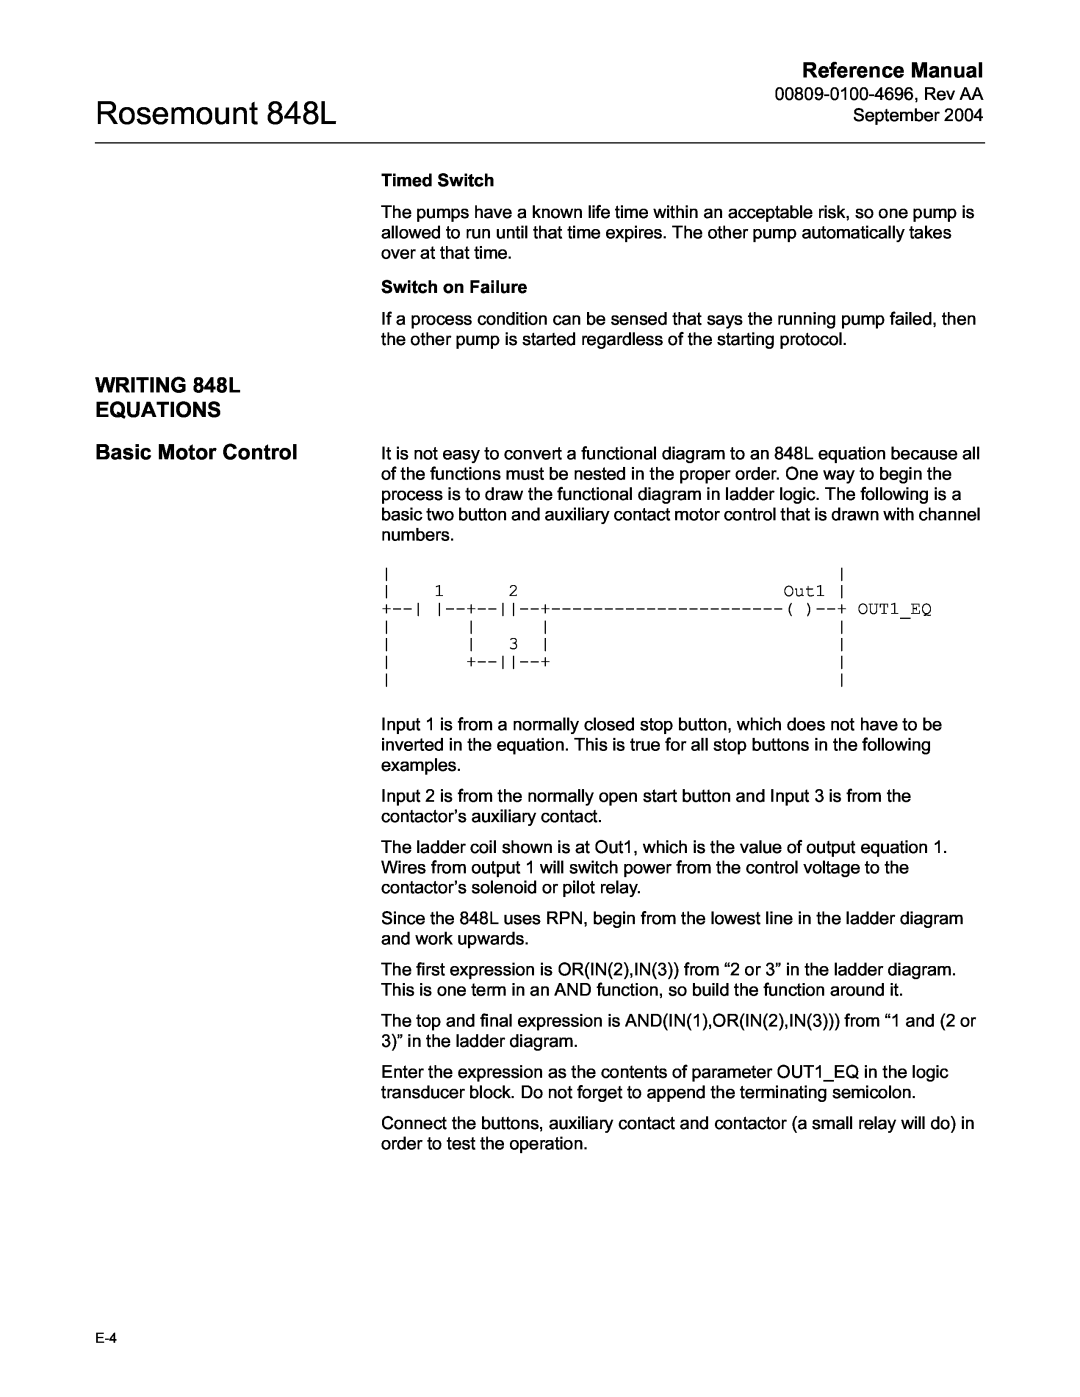 Emerson manual WRITING 848L EQUATIONS Basic Motor Control, Rosemount 848L, Reference Manual 